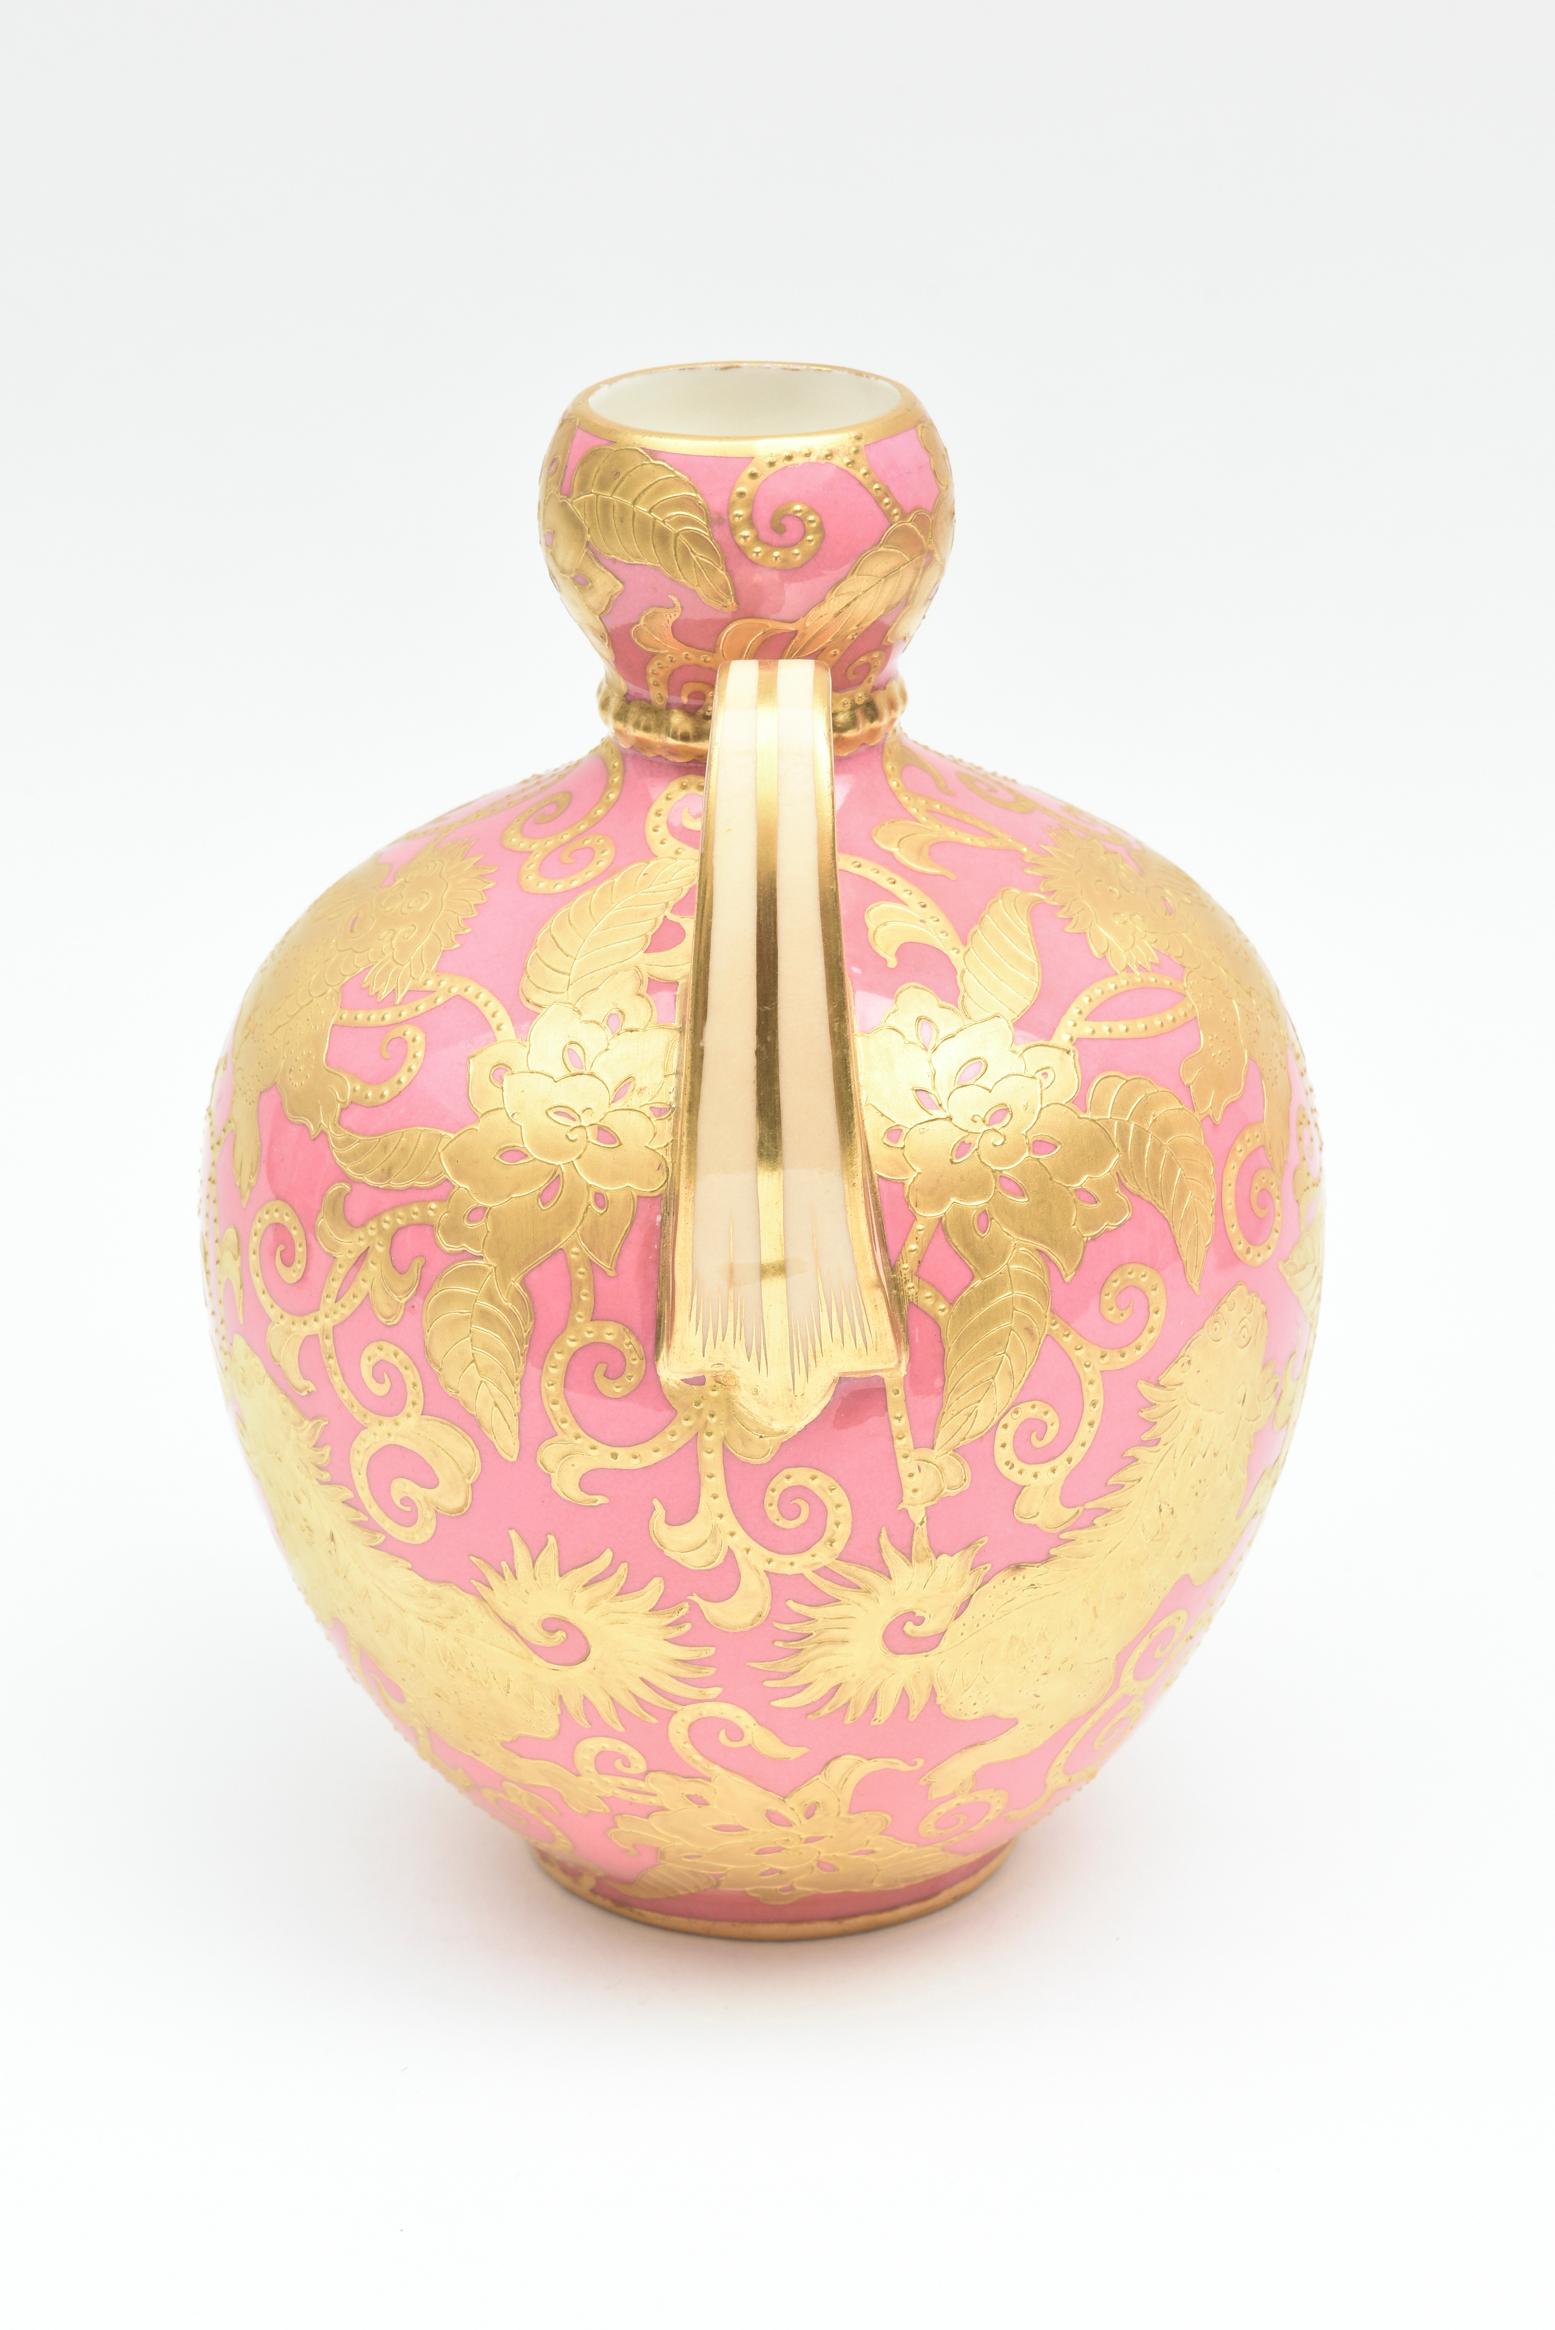 English Pink & Gold Encrusted Vase, Foo Dog Design with Elaborate Handles